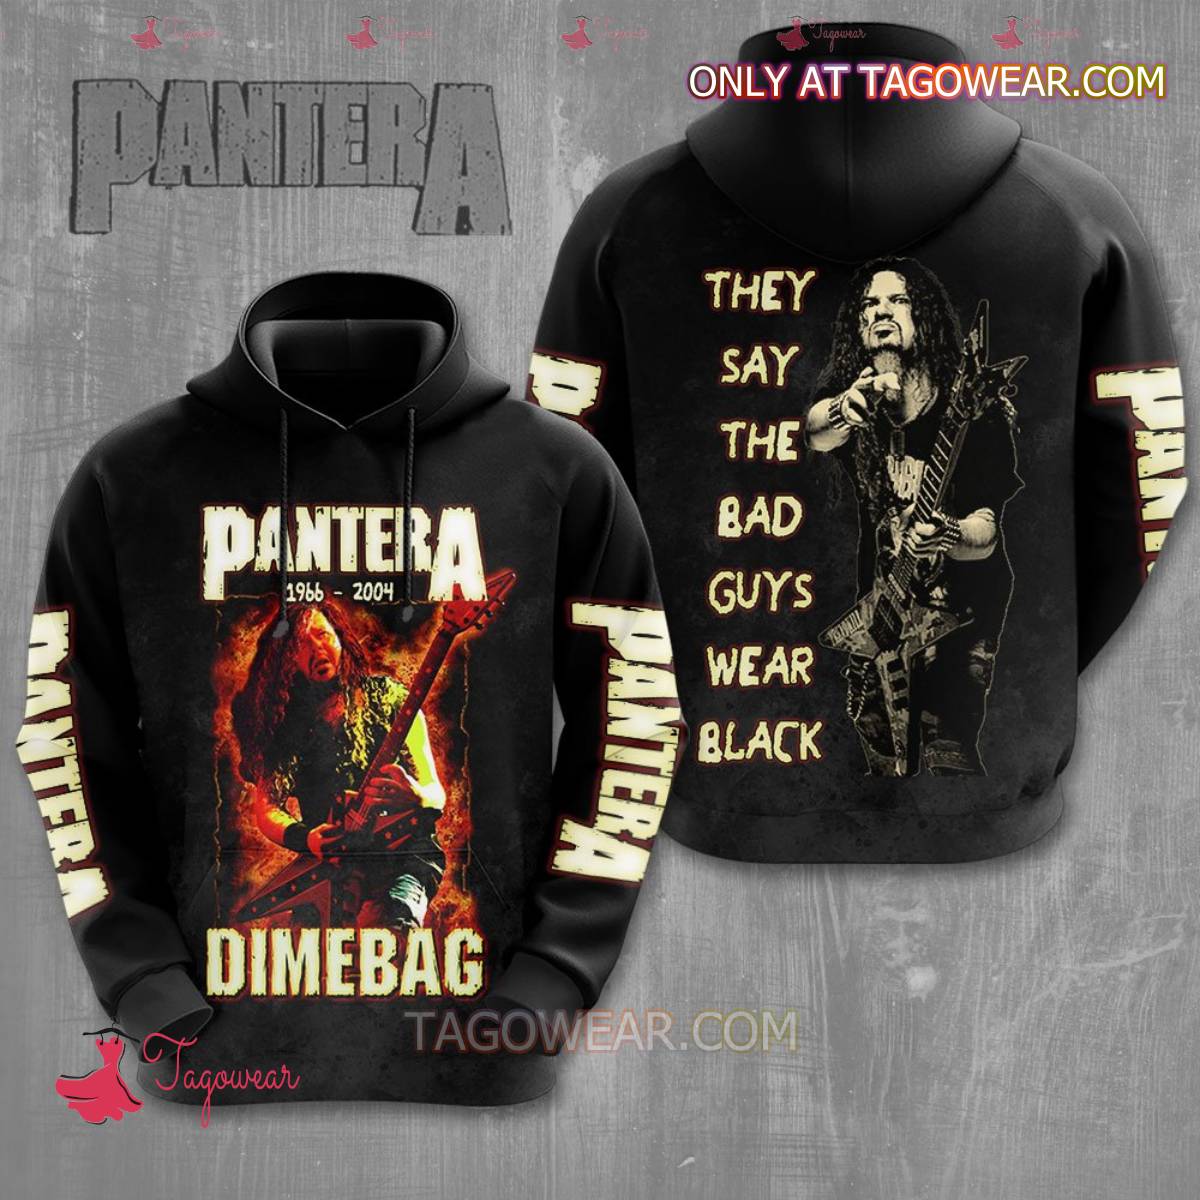 Pantera Dimebag They Say The Bad Guys Wear Black T-shirt, Hoodie a